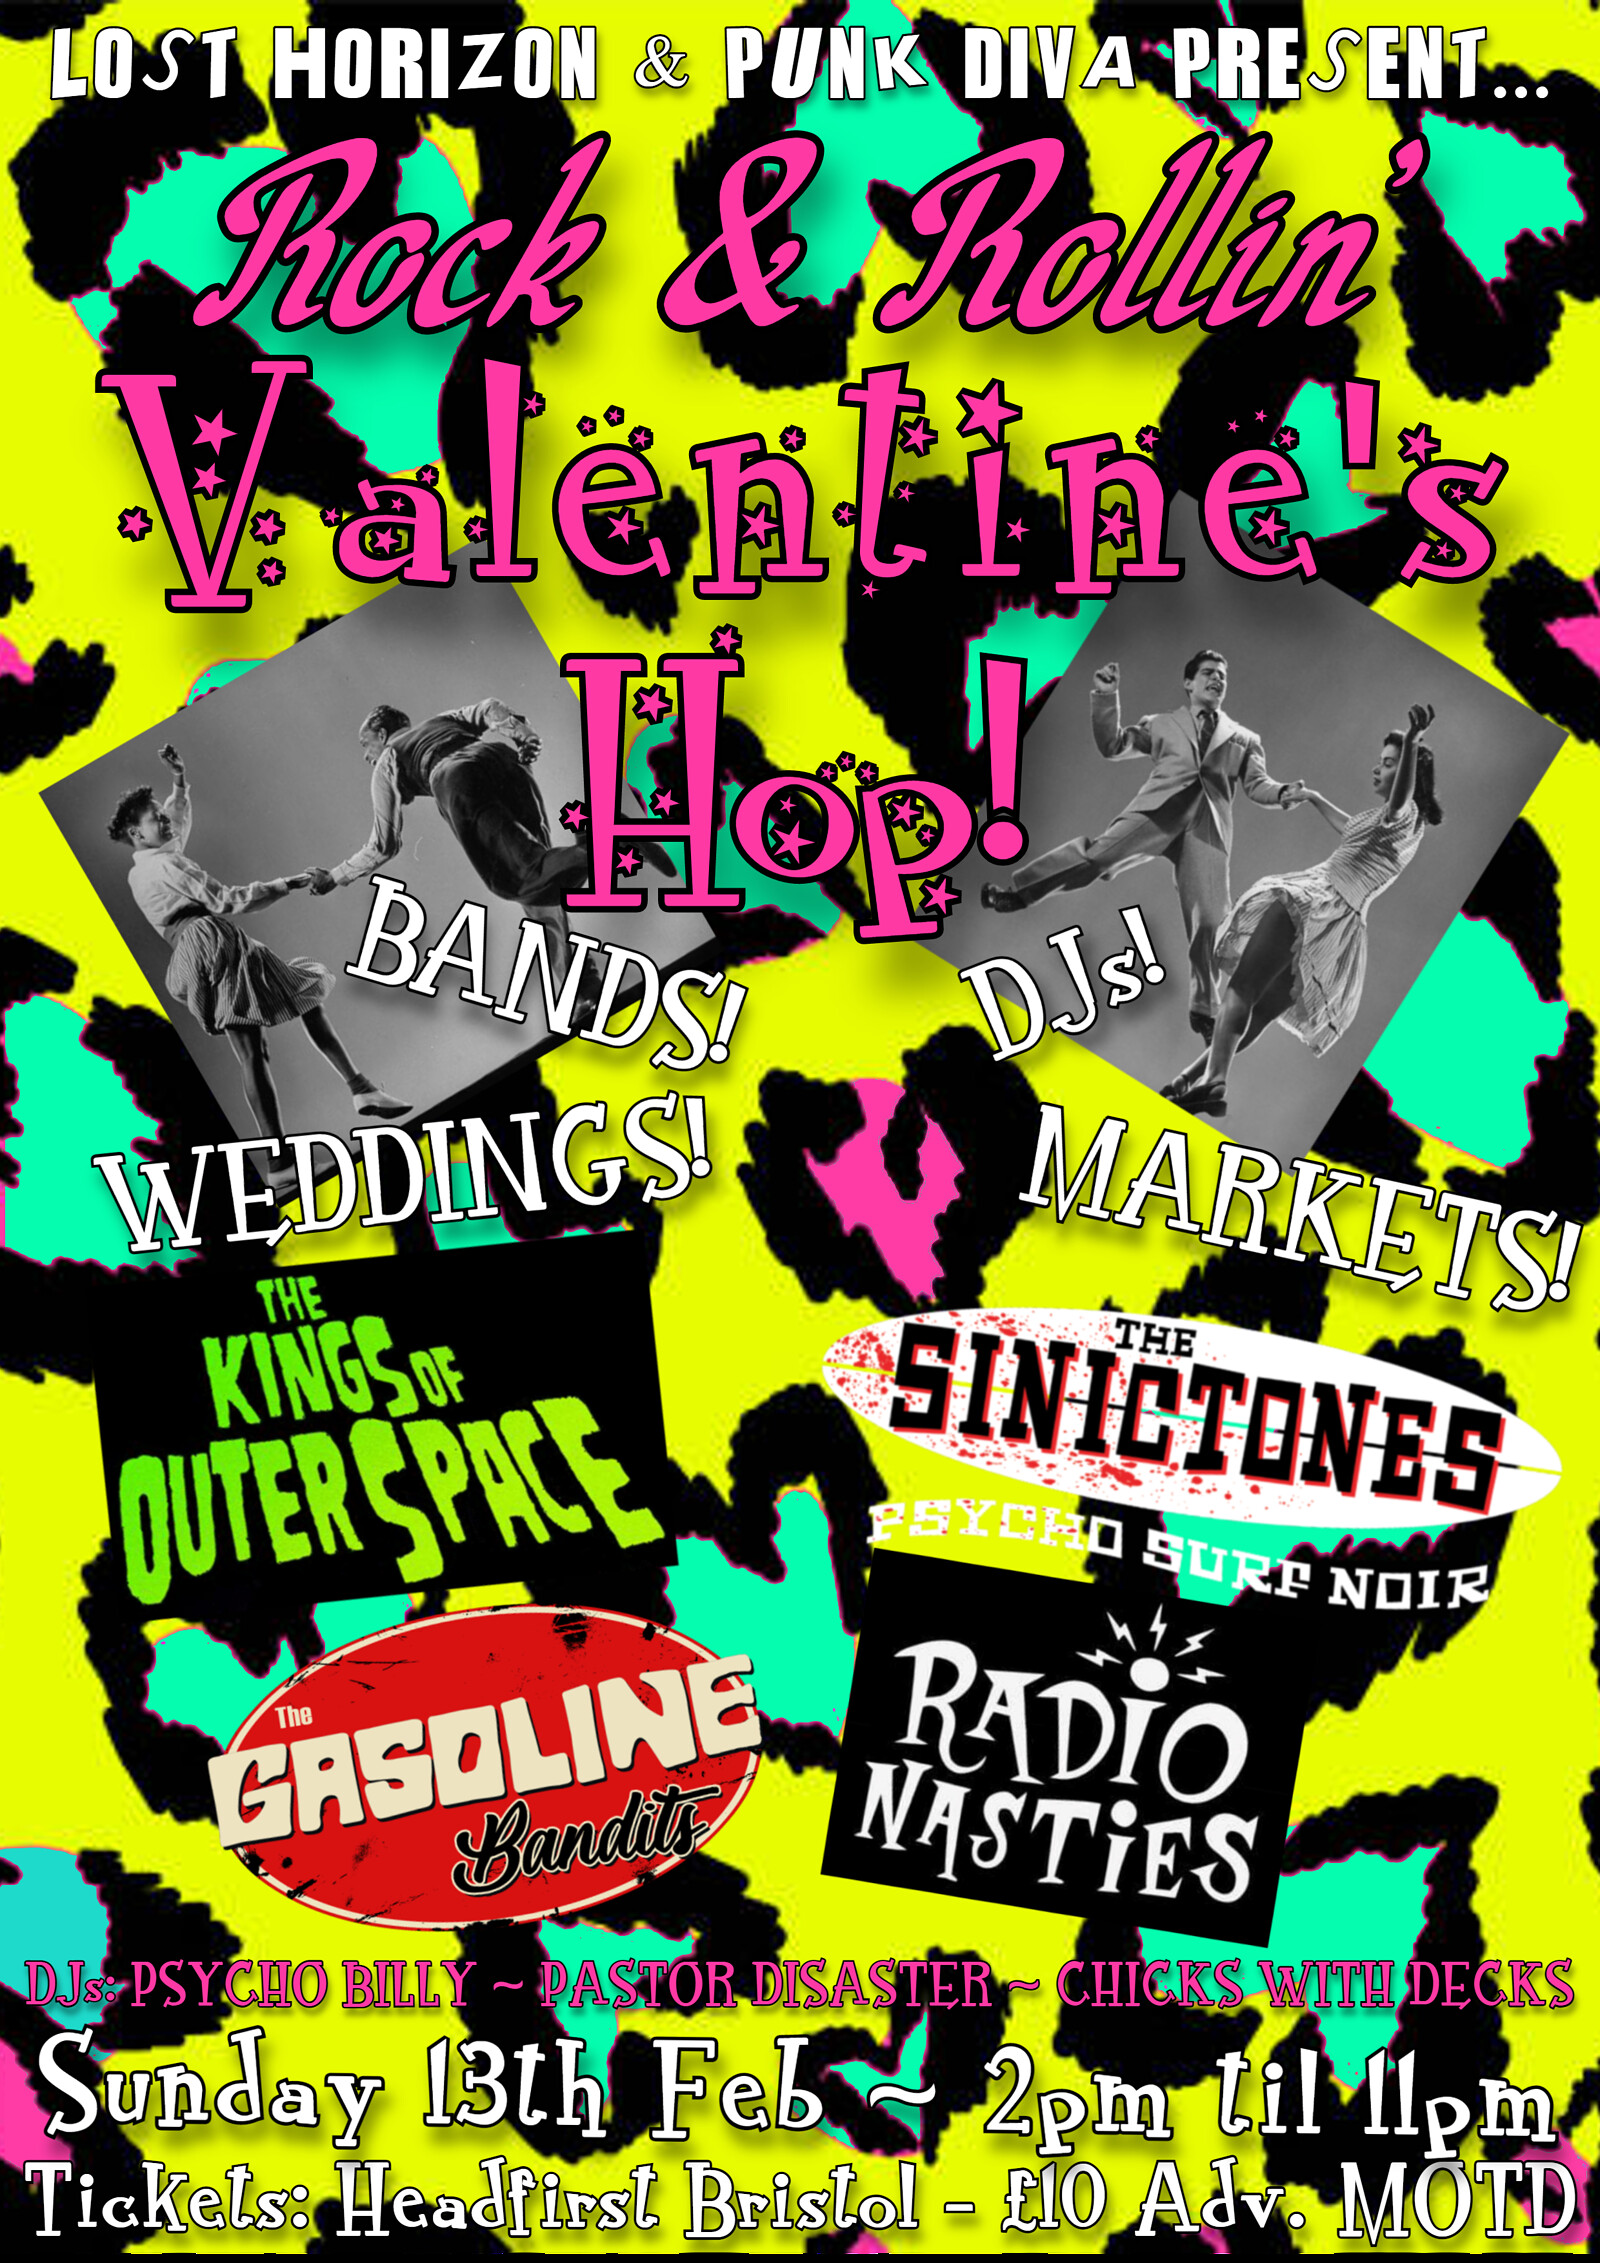 The Rock & Rollin' Valentine's Hop at Lost Horizon